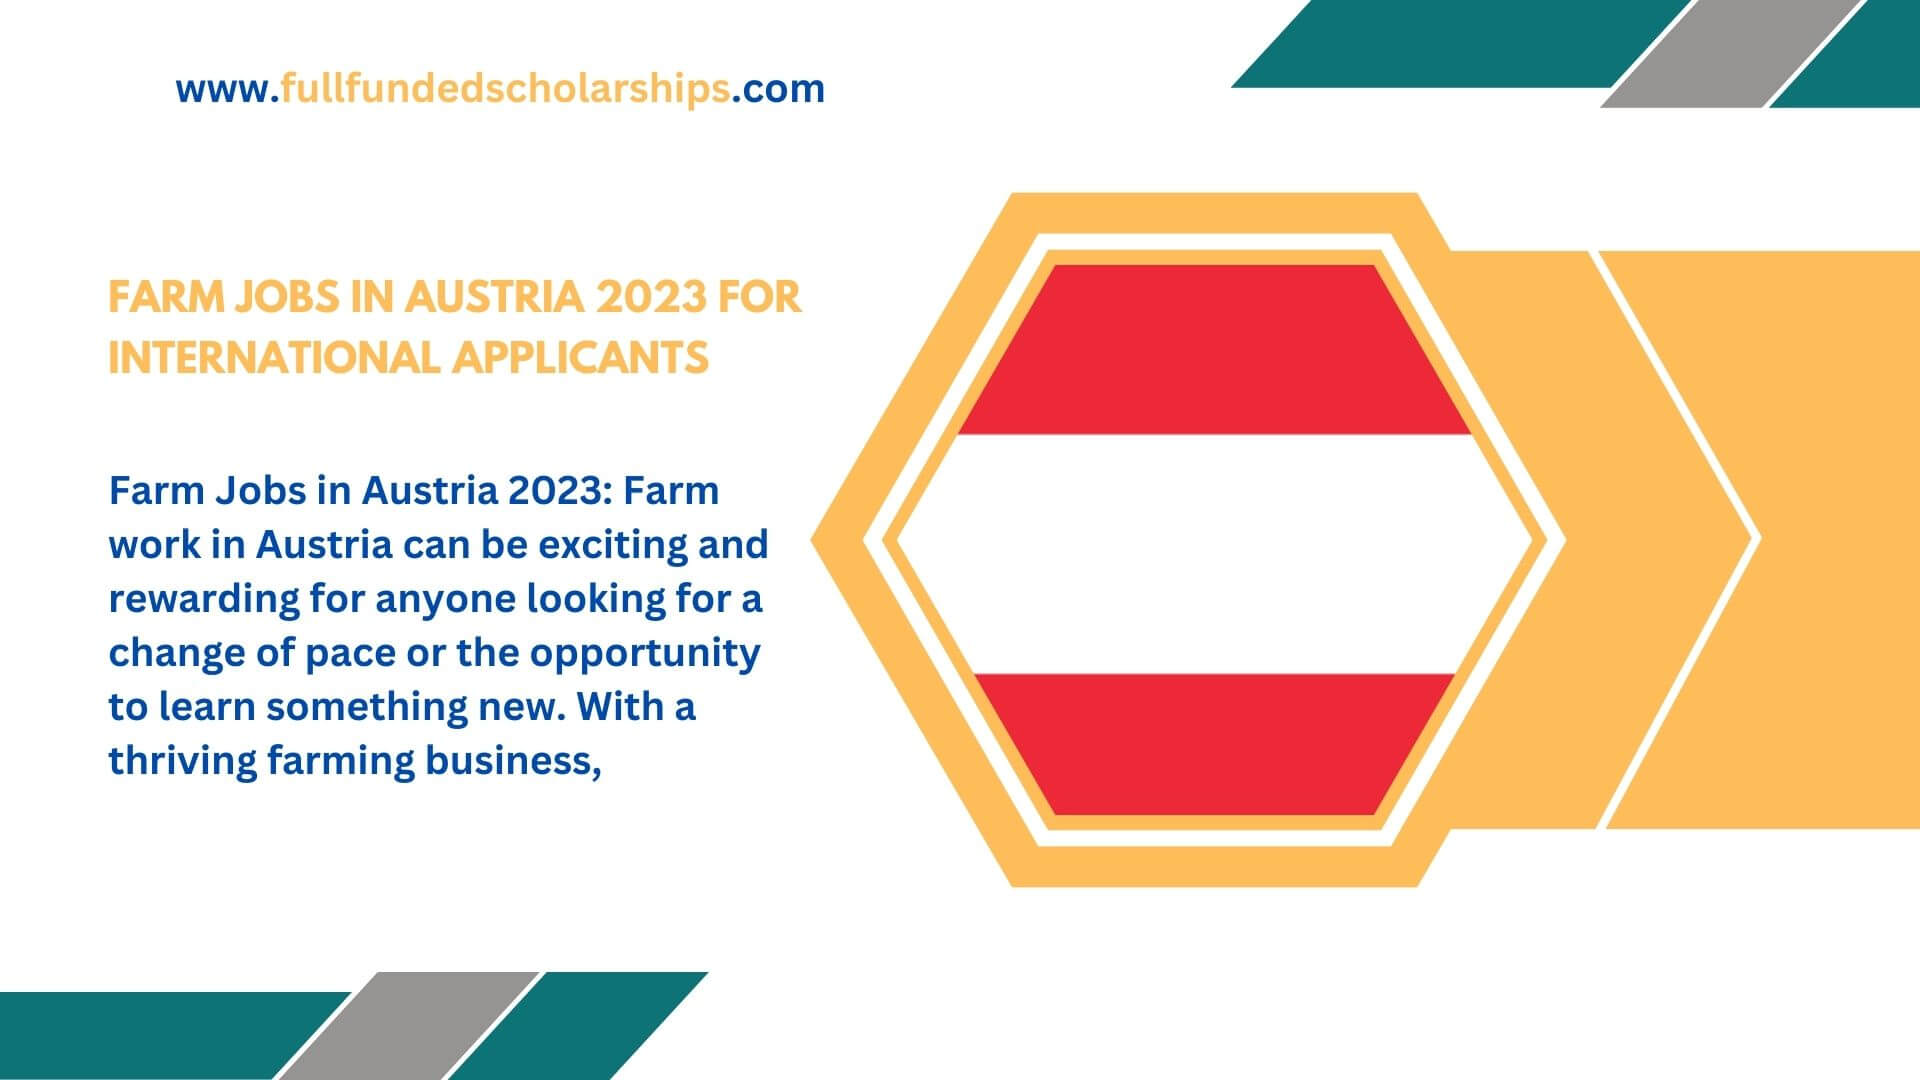 Farm Jobs in Austria 2023 for International Applicants